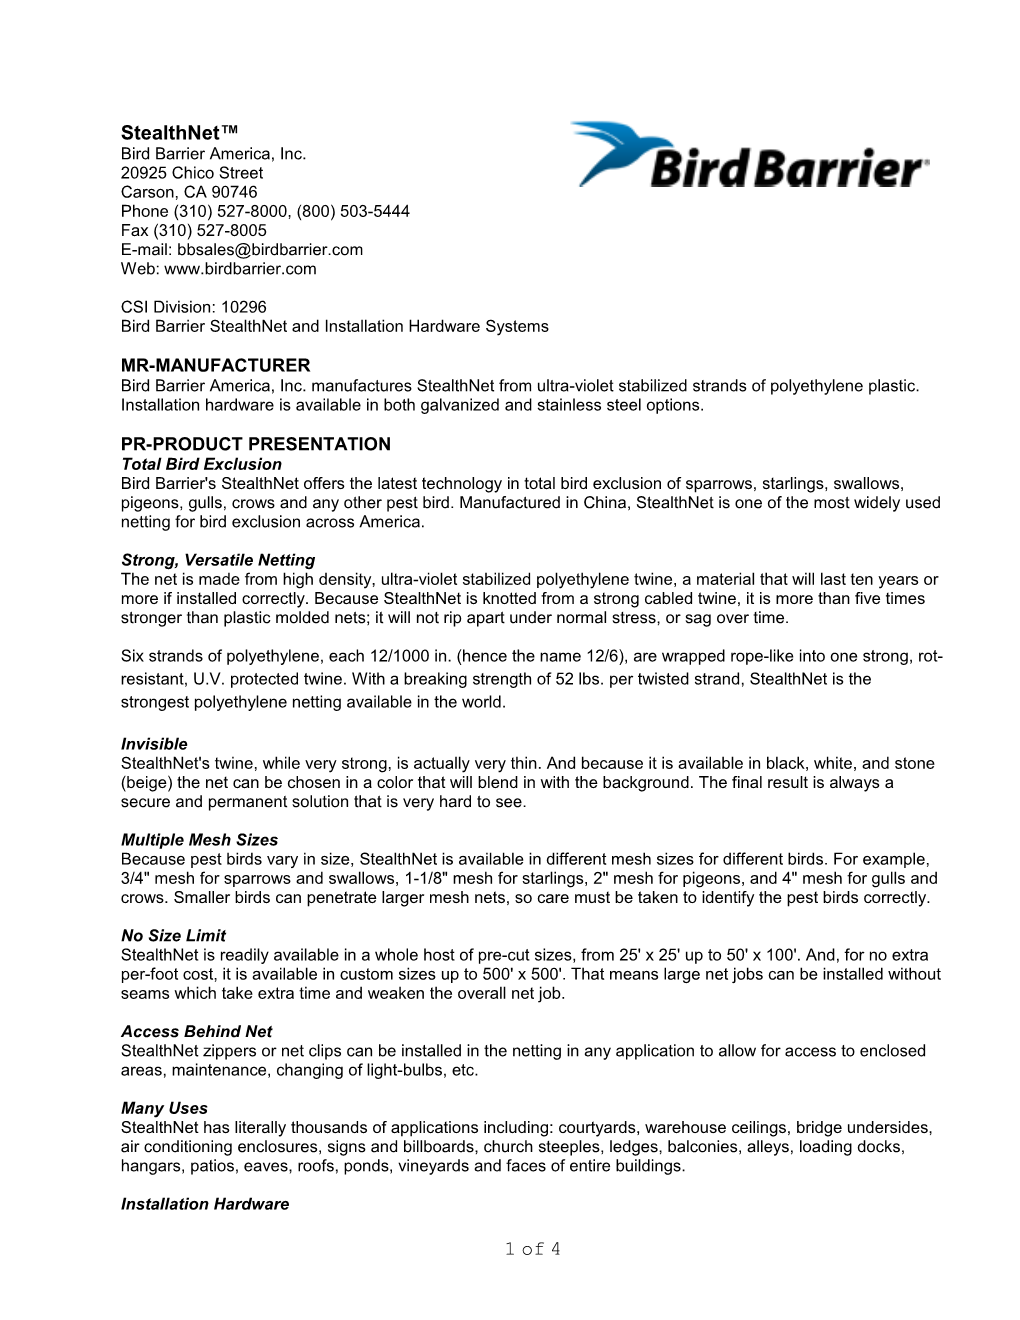 Bird Barrier Stealthnet and Installation Hardware Systems